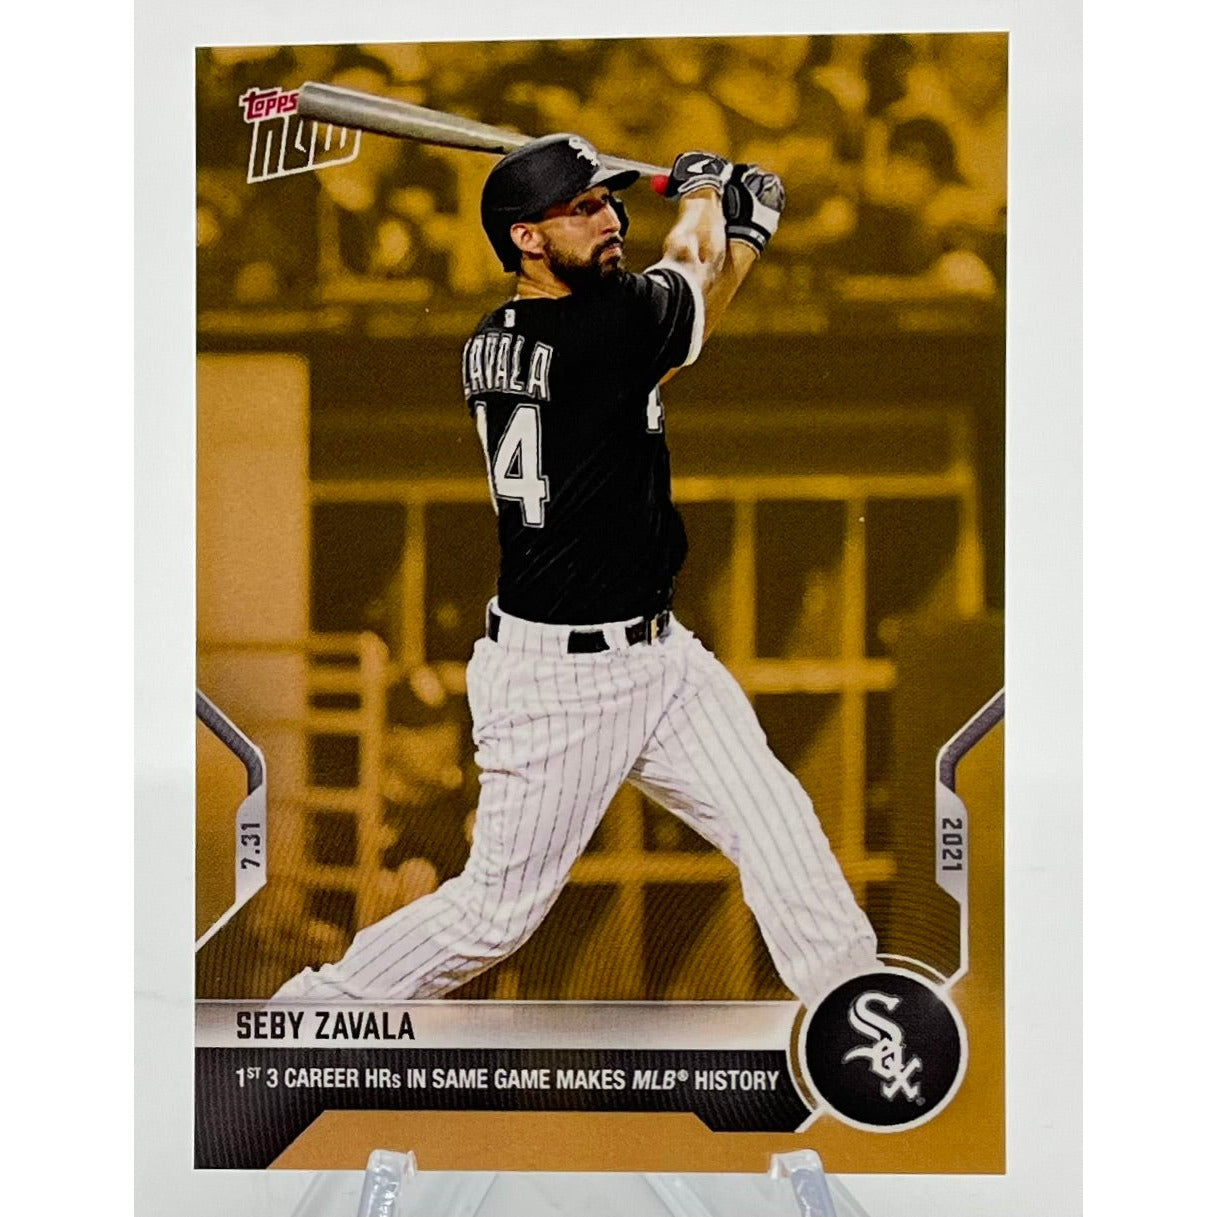 2021 Topps Now Bonus Card - Chicago White Sox' Seby Zavala 3 HR Game # –  Fandom Trade